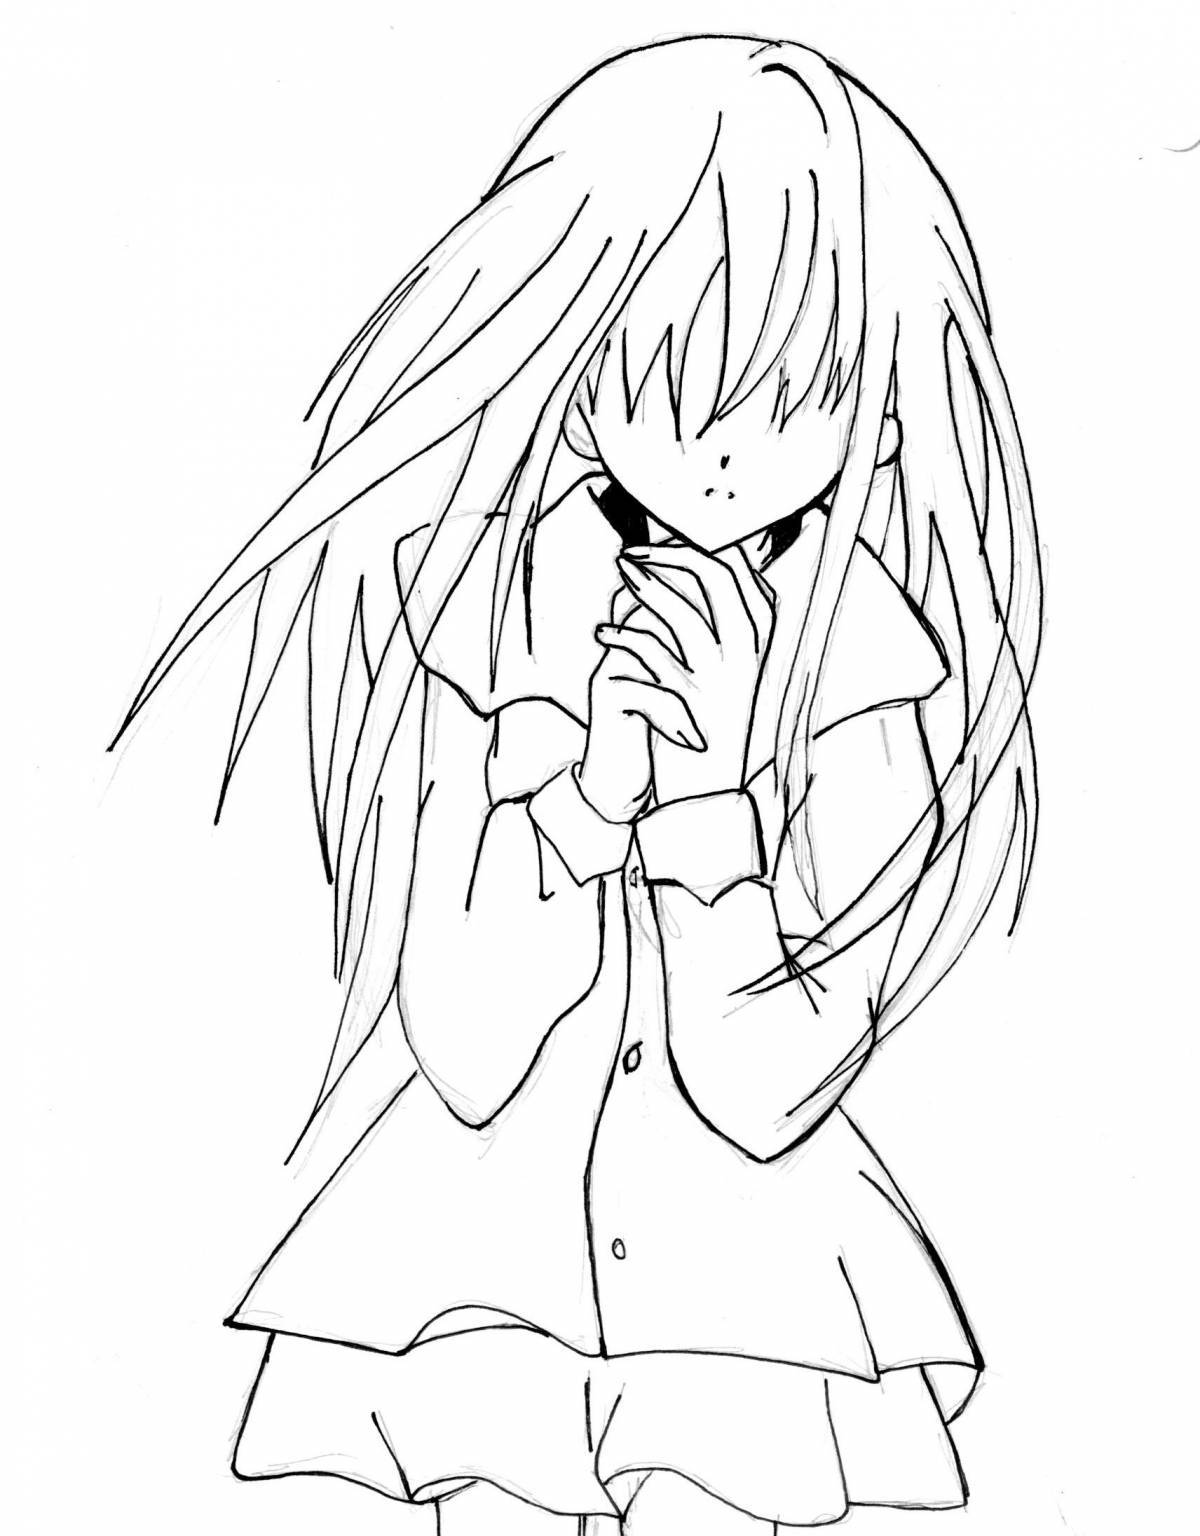 Cute Kurumi coloring page